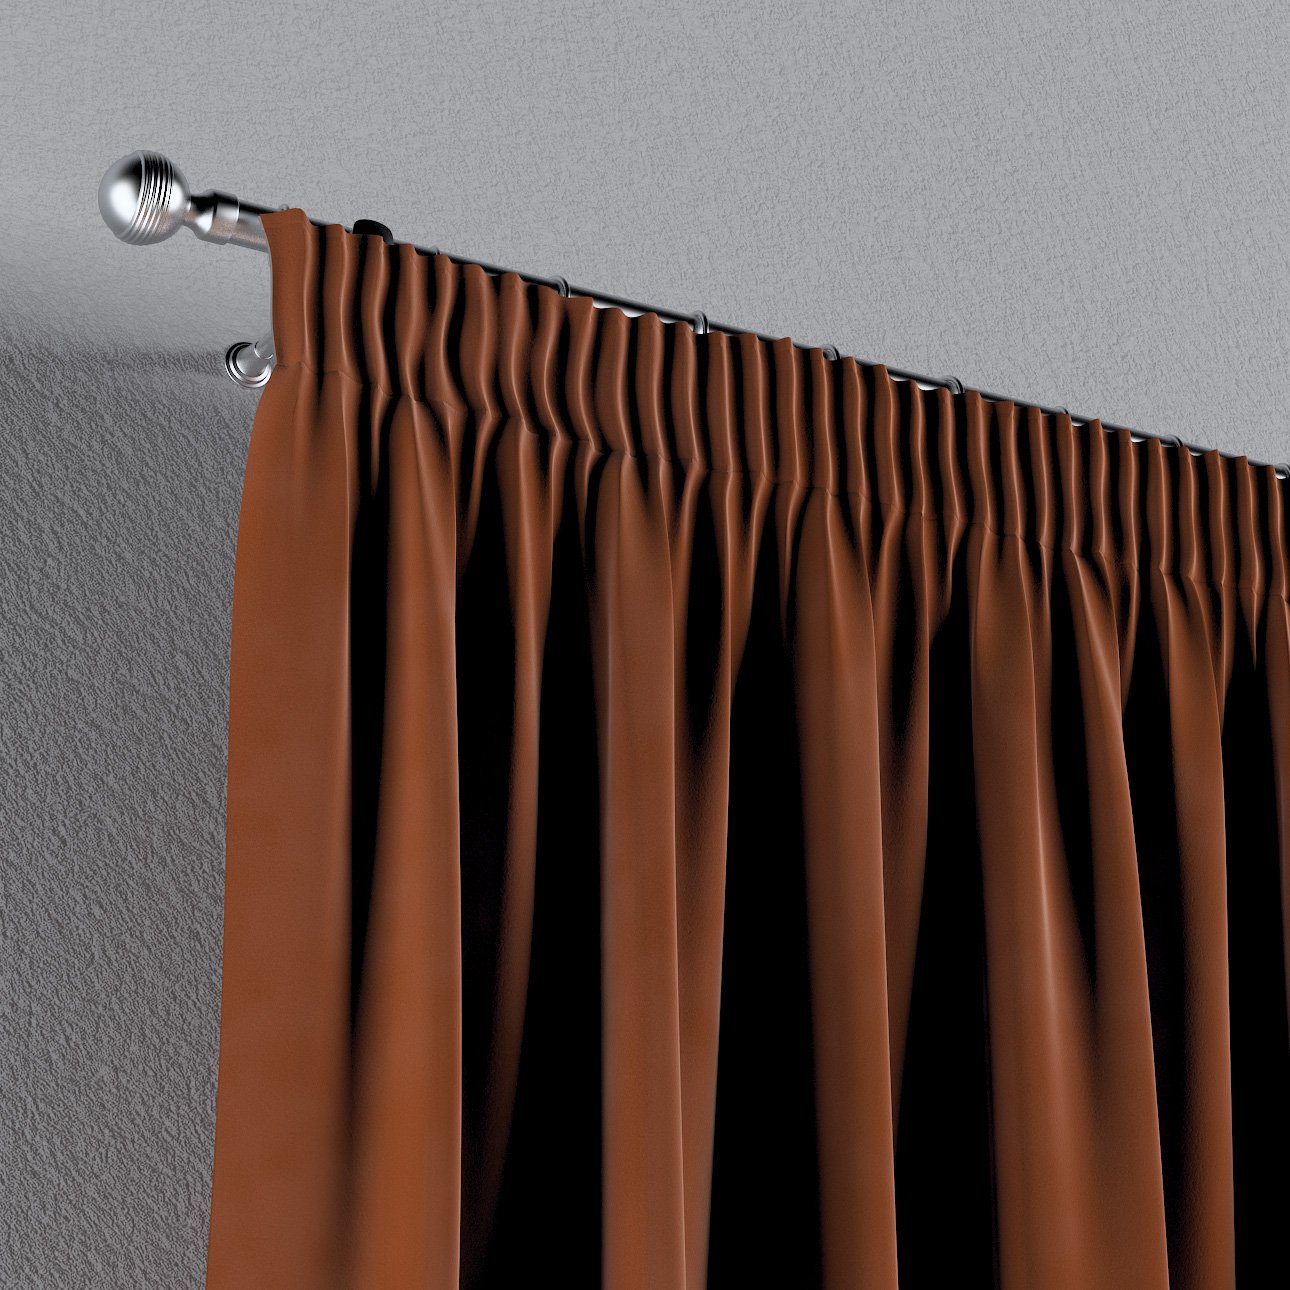 Vorhang mit Kräuselband, braun-karamell, 704-33